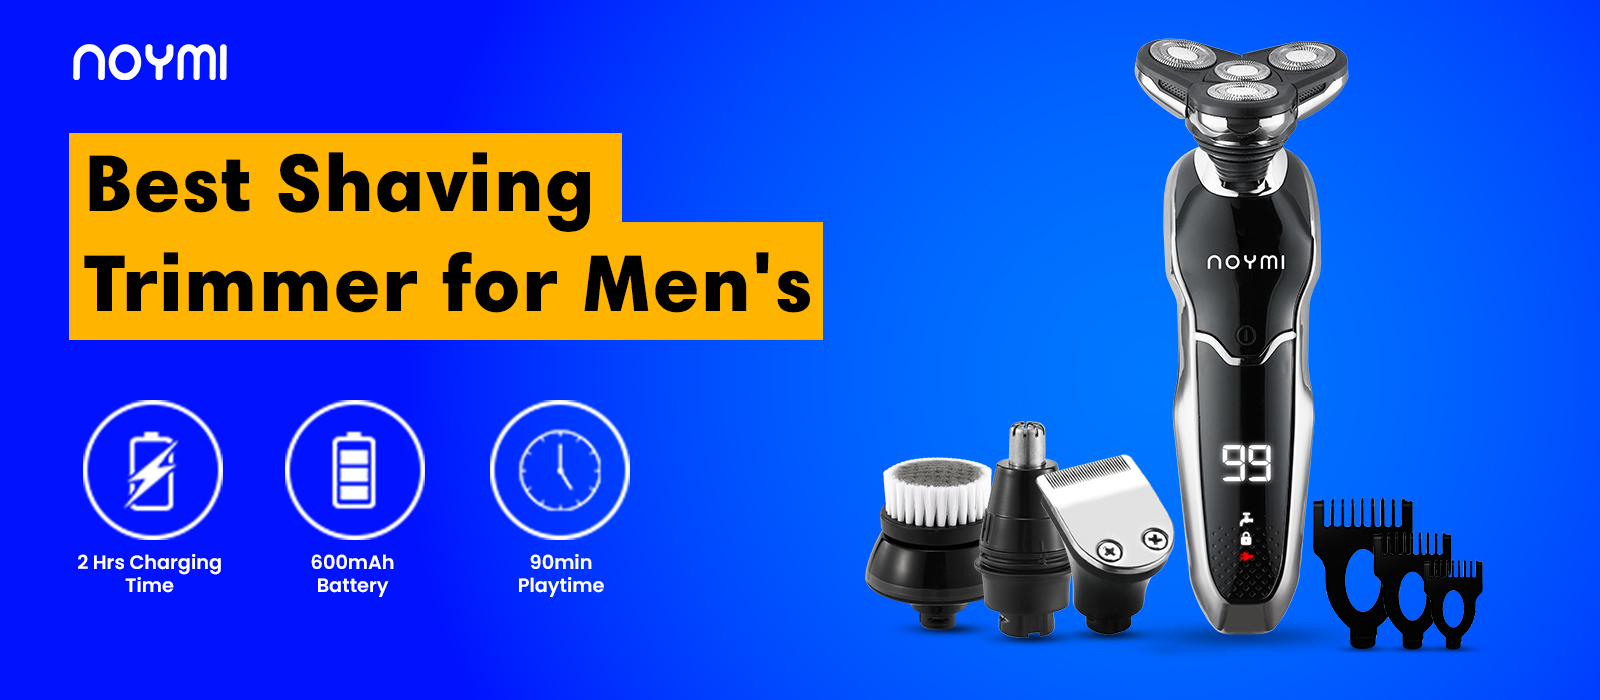 Best Shaving Trimmer for Men's Ultimate Grooming Experience